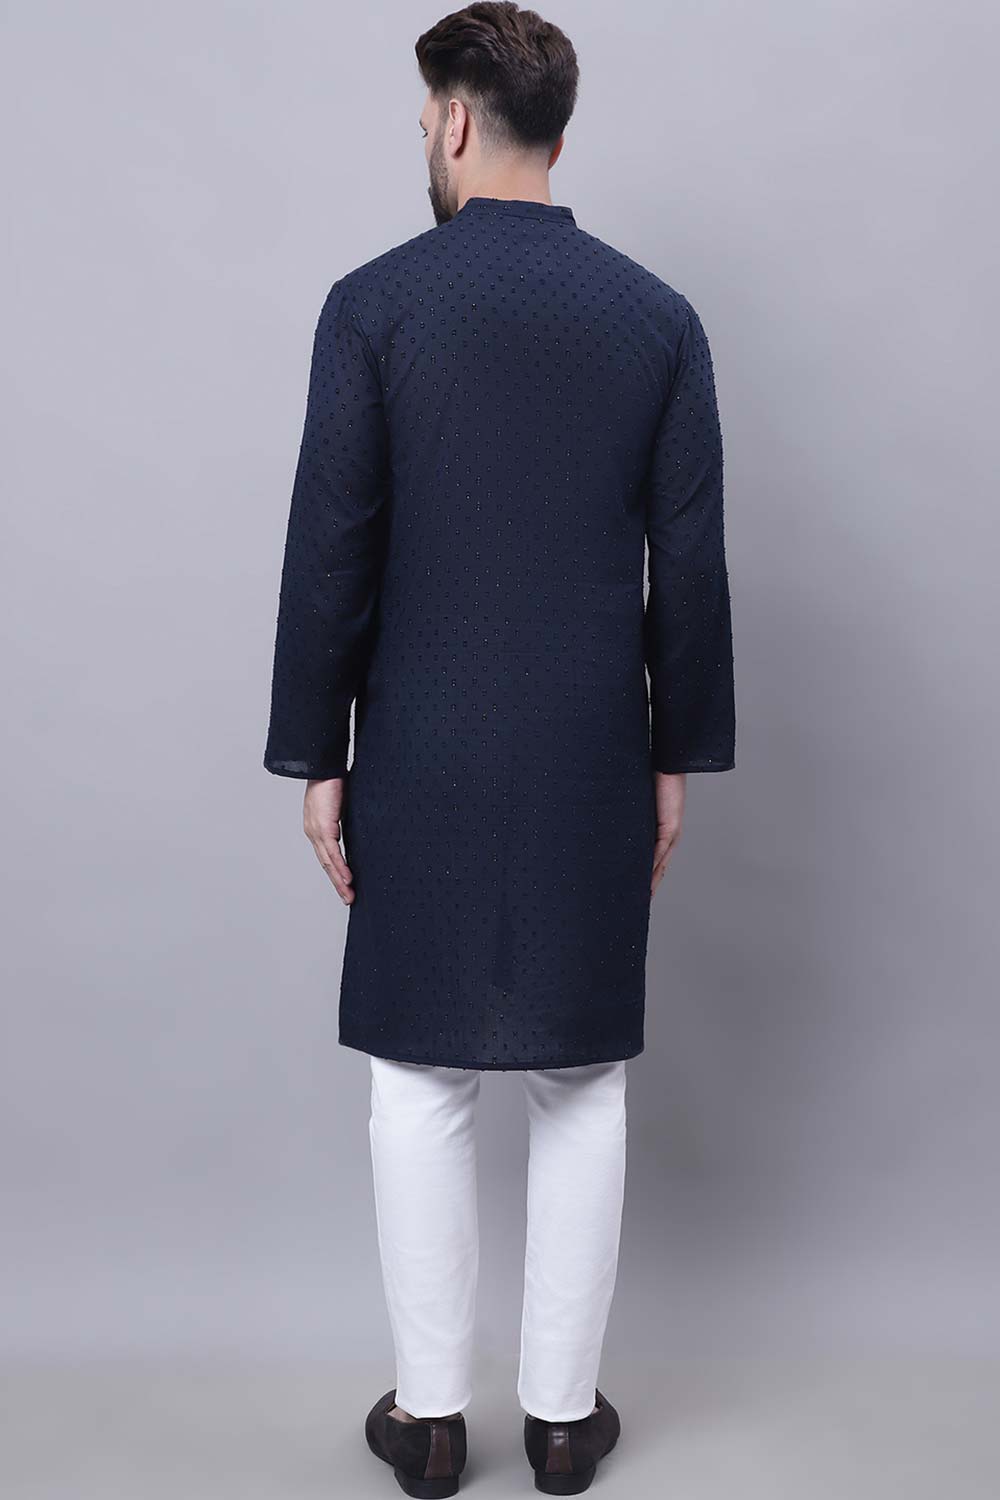 Buy Men's Blue Cotton Self Design Long Kurta Top Online - Front